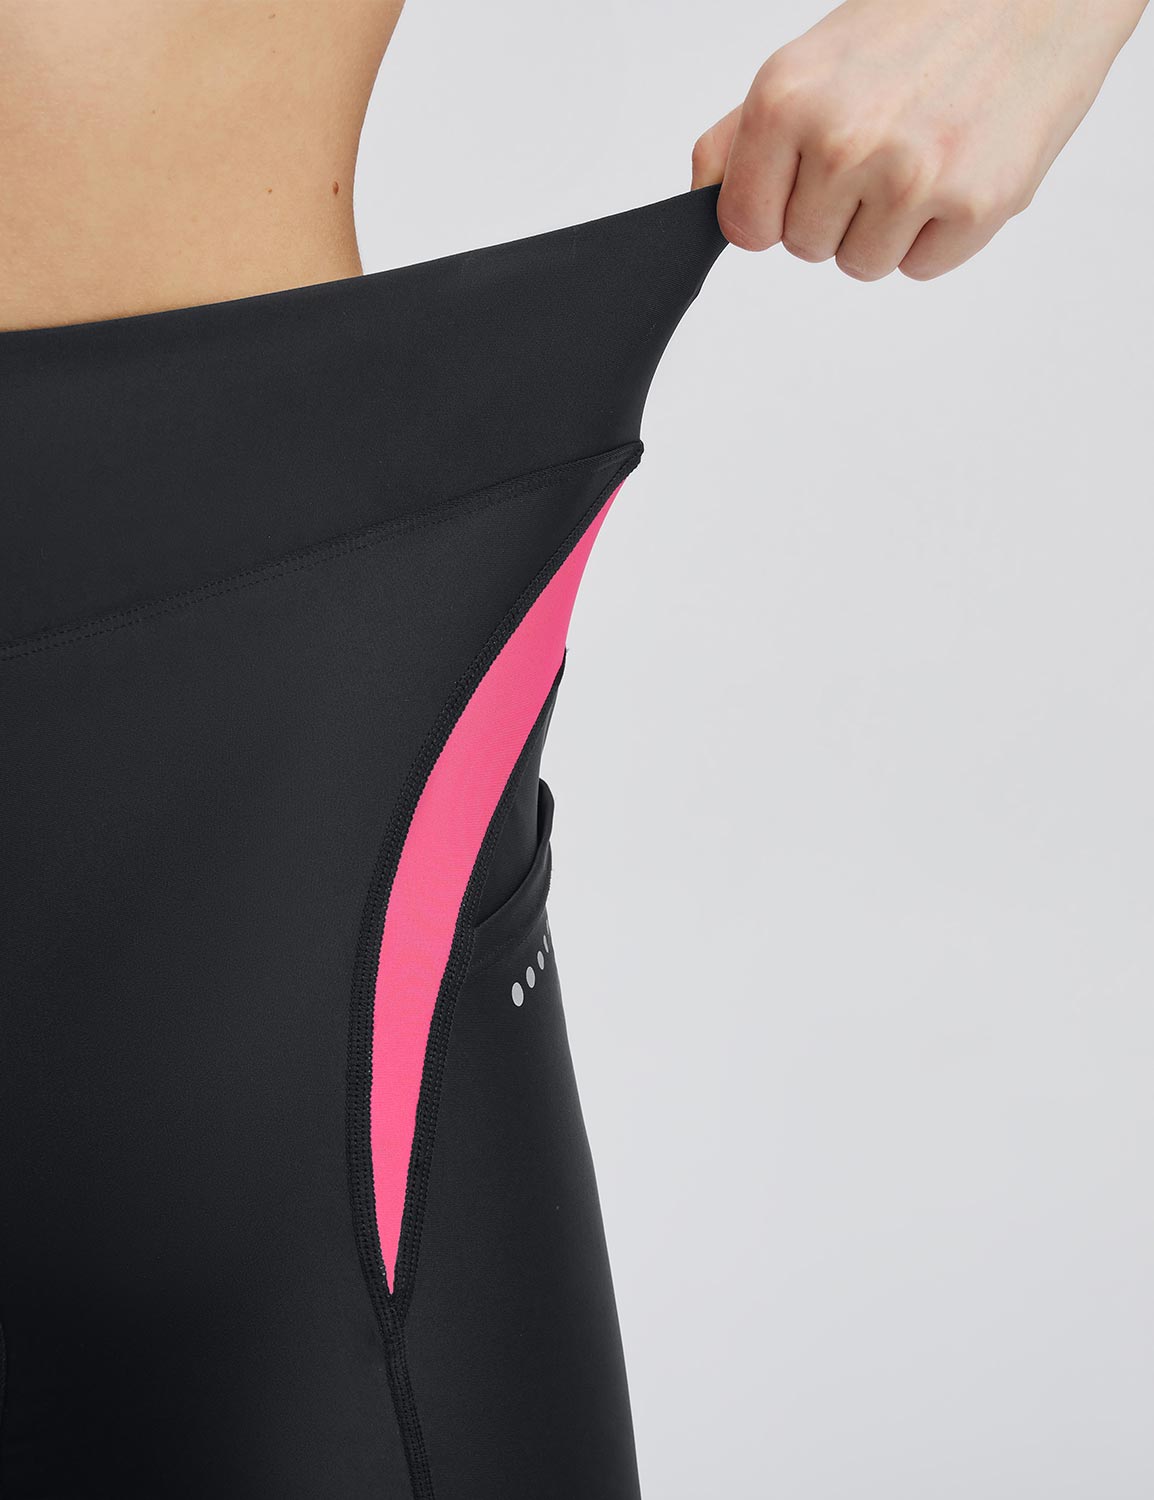 Baleaf Women's High Rise 4D Padded Bike Shorts Hot Pink Details